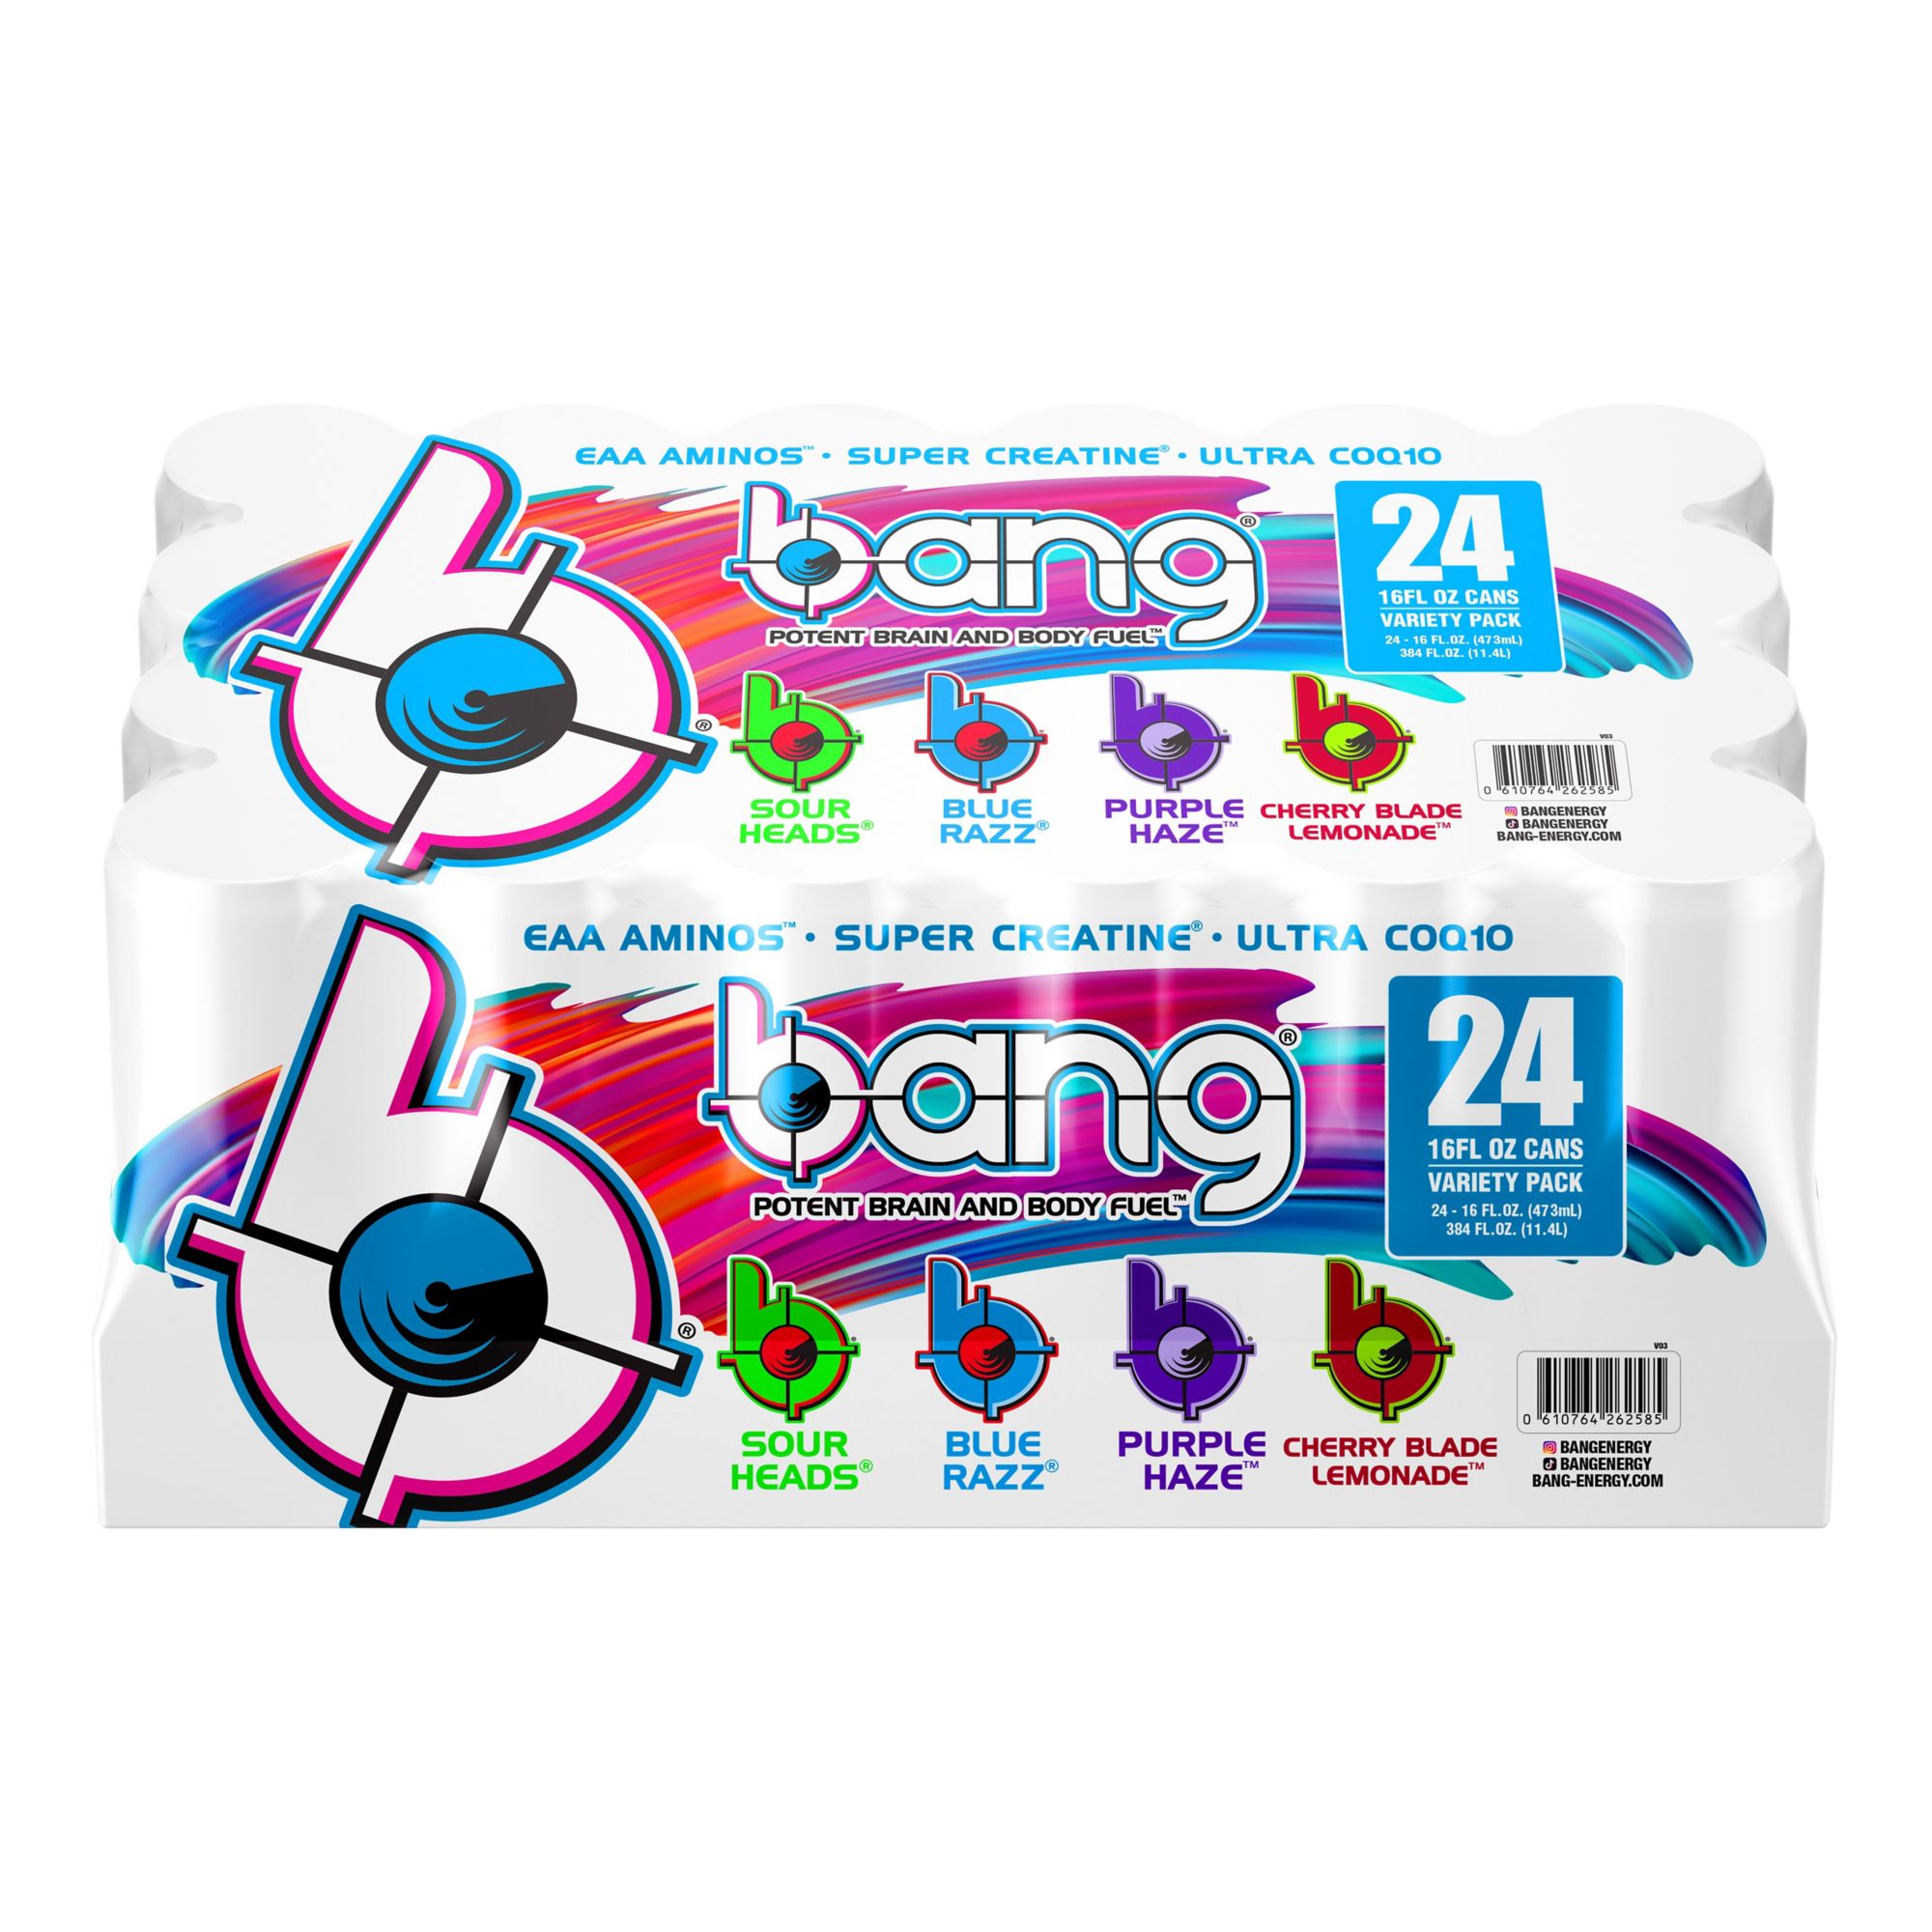 Bang Energy Variety Pack, 24 pk./16 fl. oz.